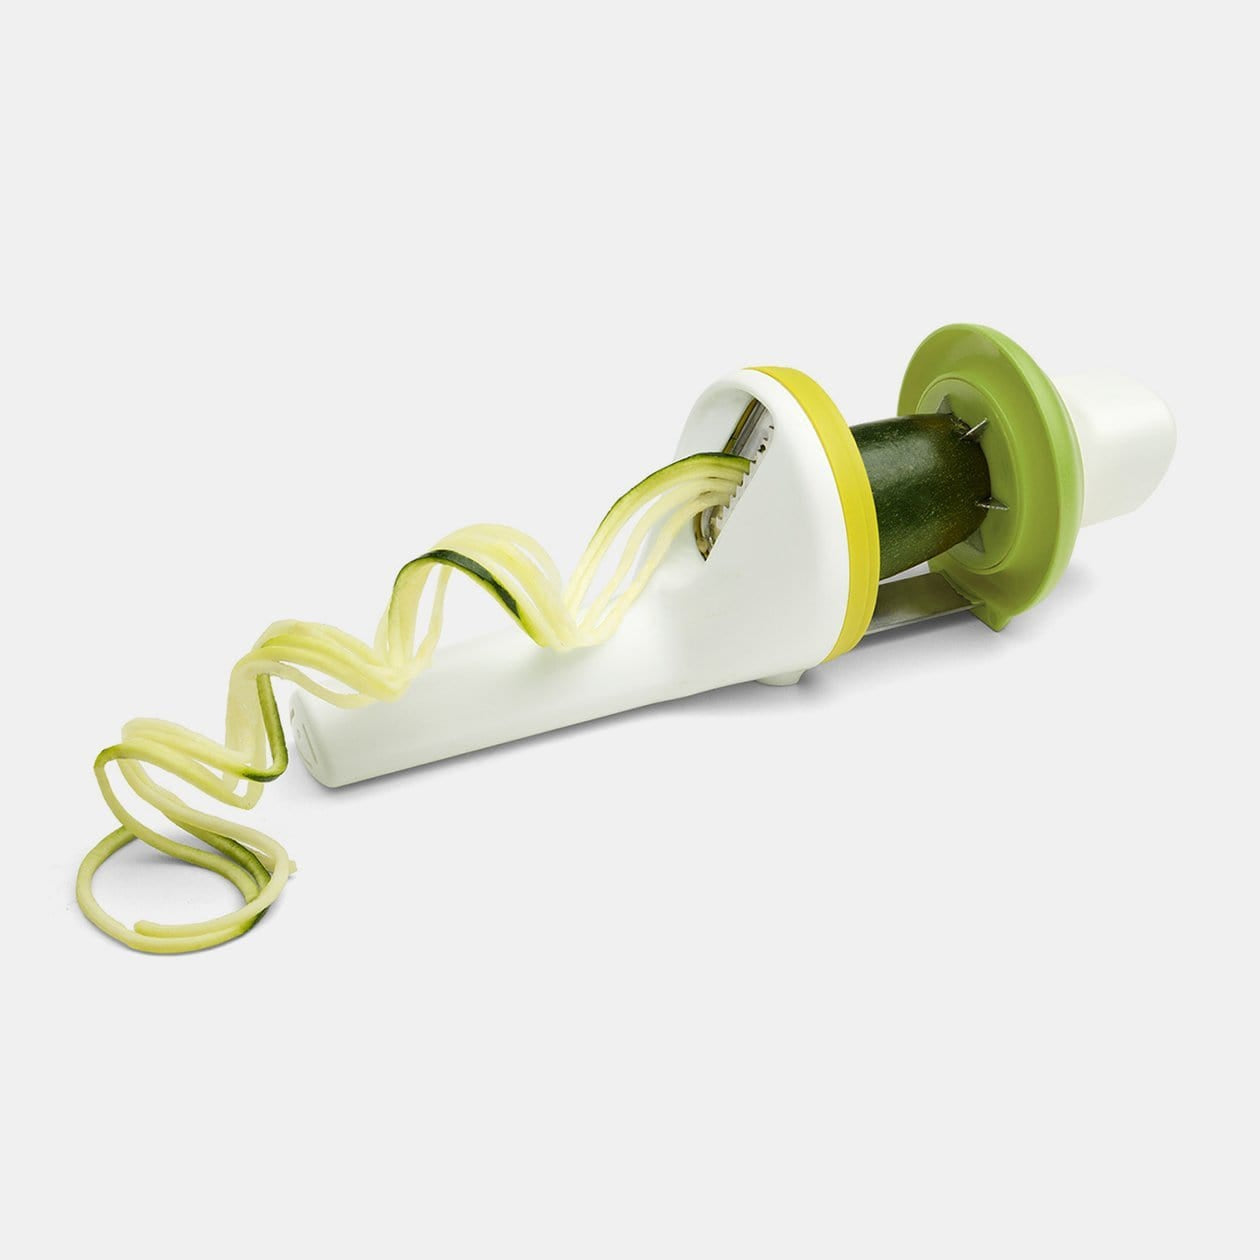 1pc Randomly Colored Ultra-thin Cucumber Slicer, Curling Pen